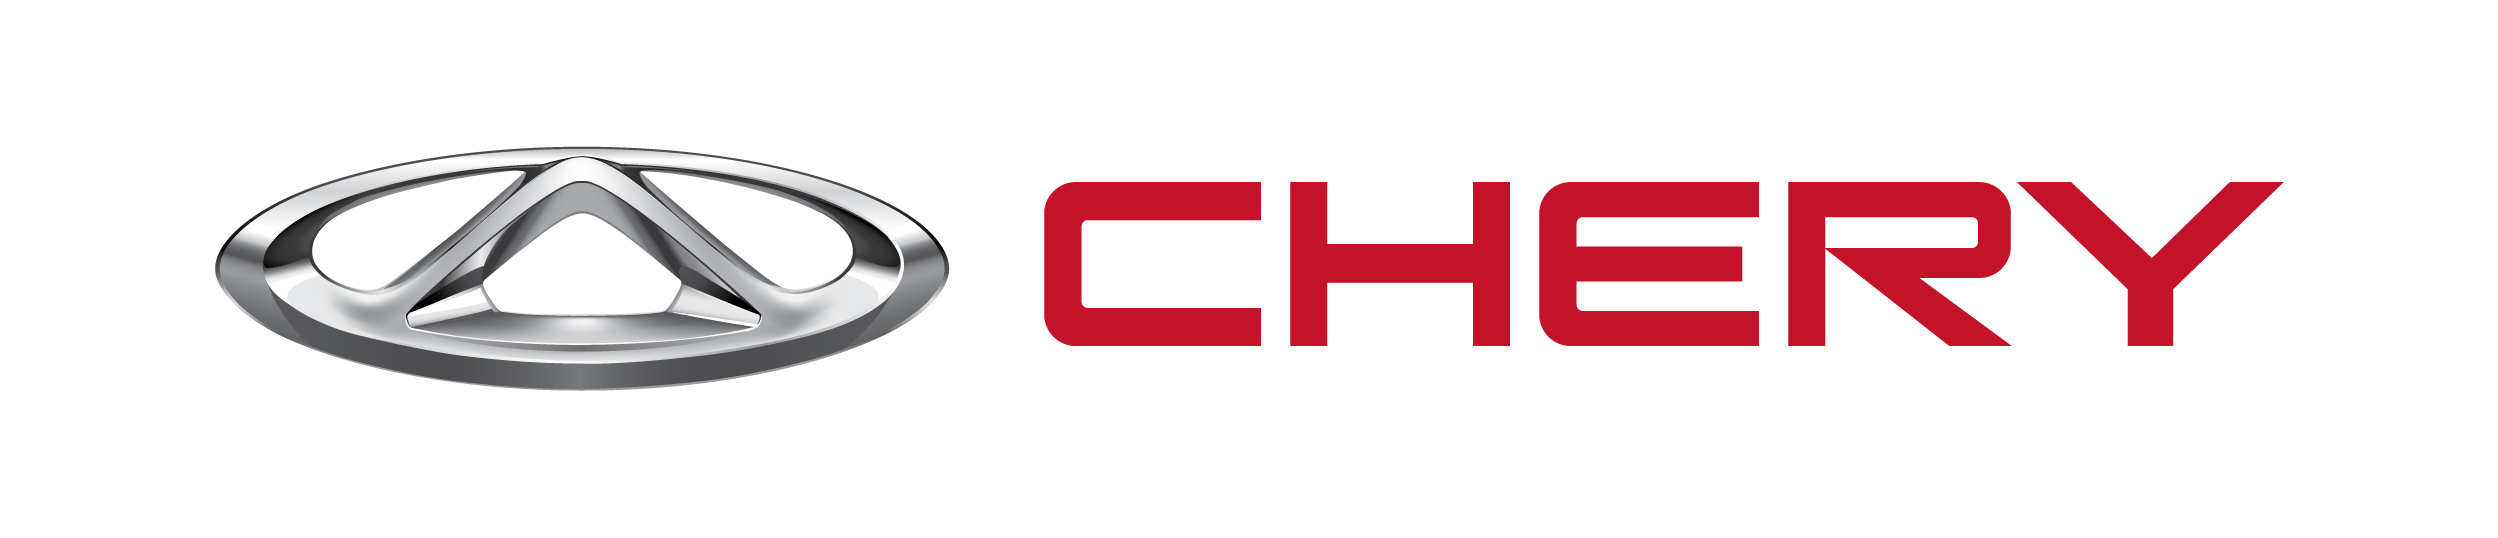 chery-logo